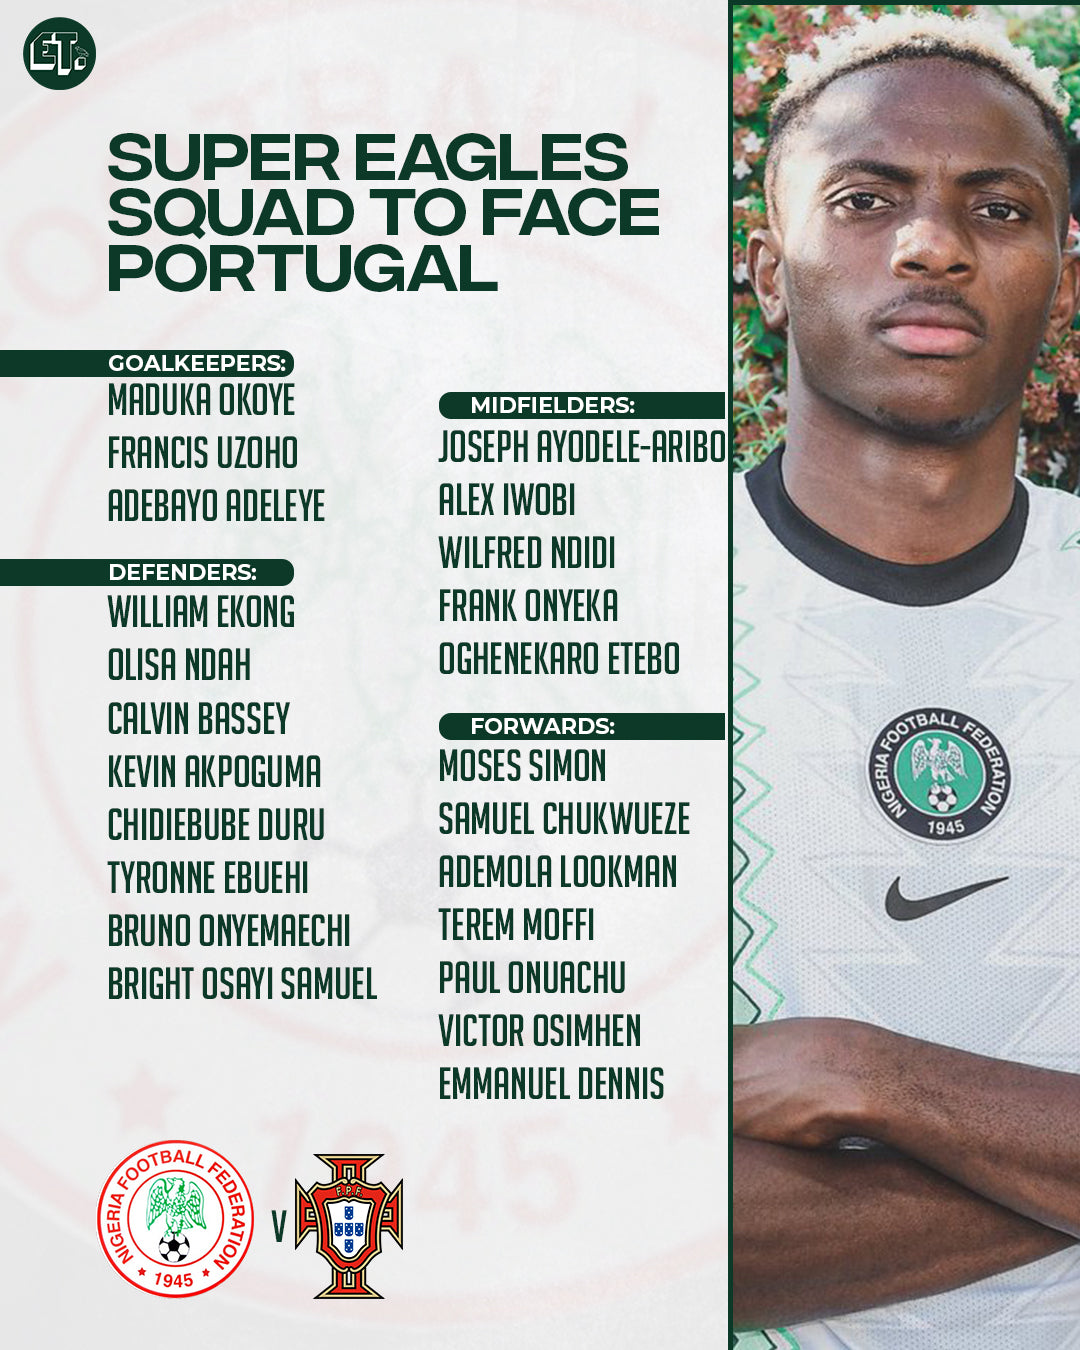 Samuel Chukwueze lands in Lisbon as 23 Super Eagles stars get set for Portugal friendly